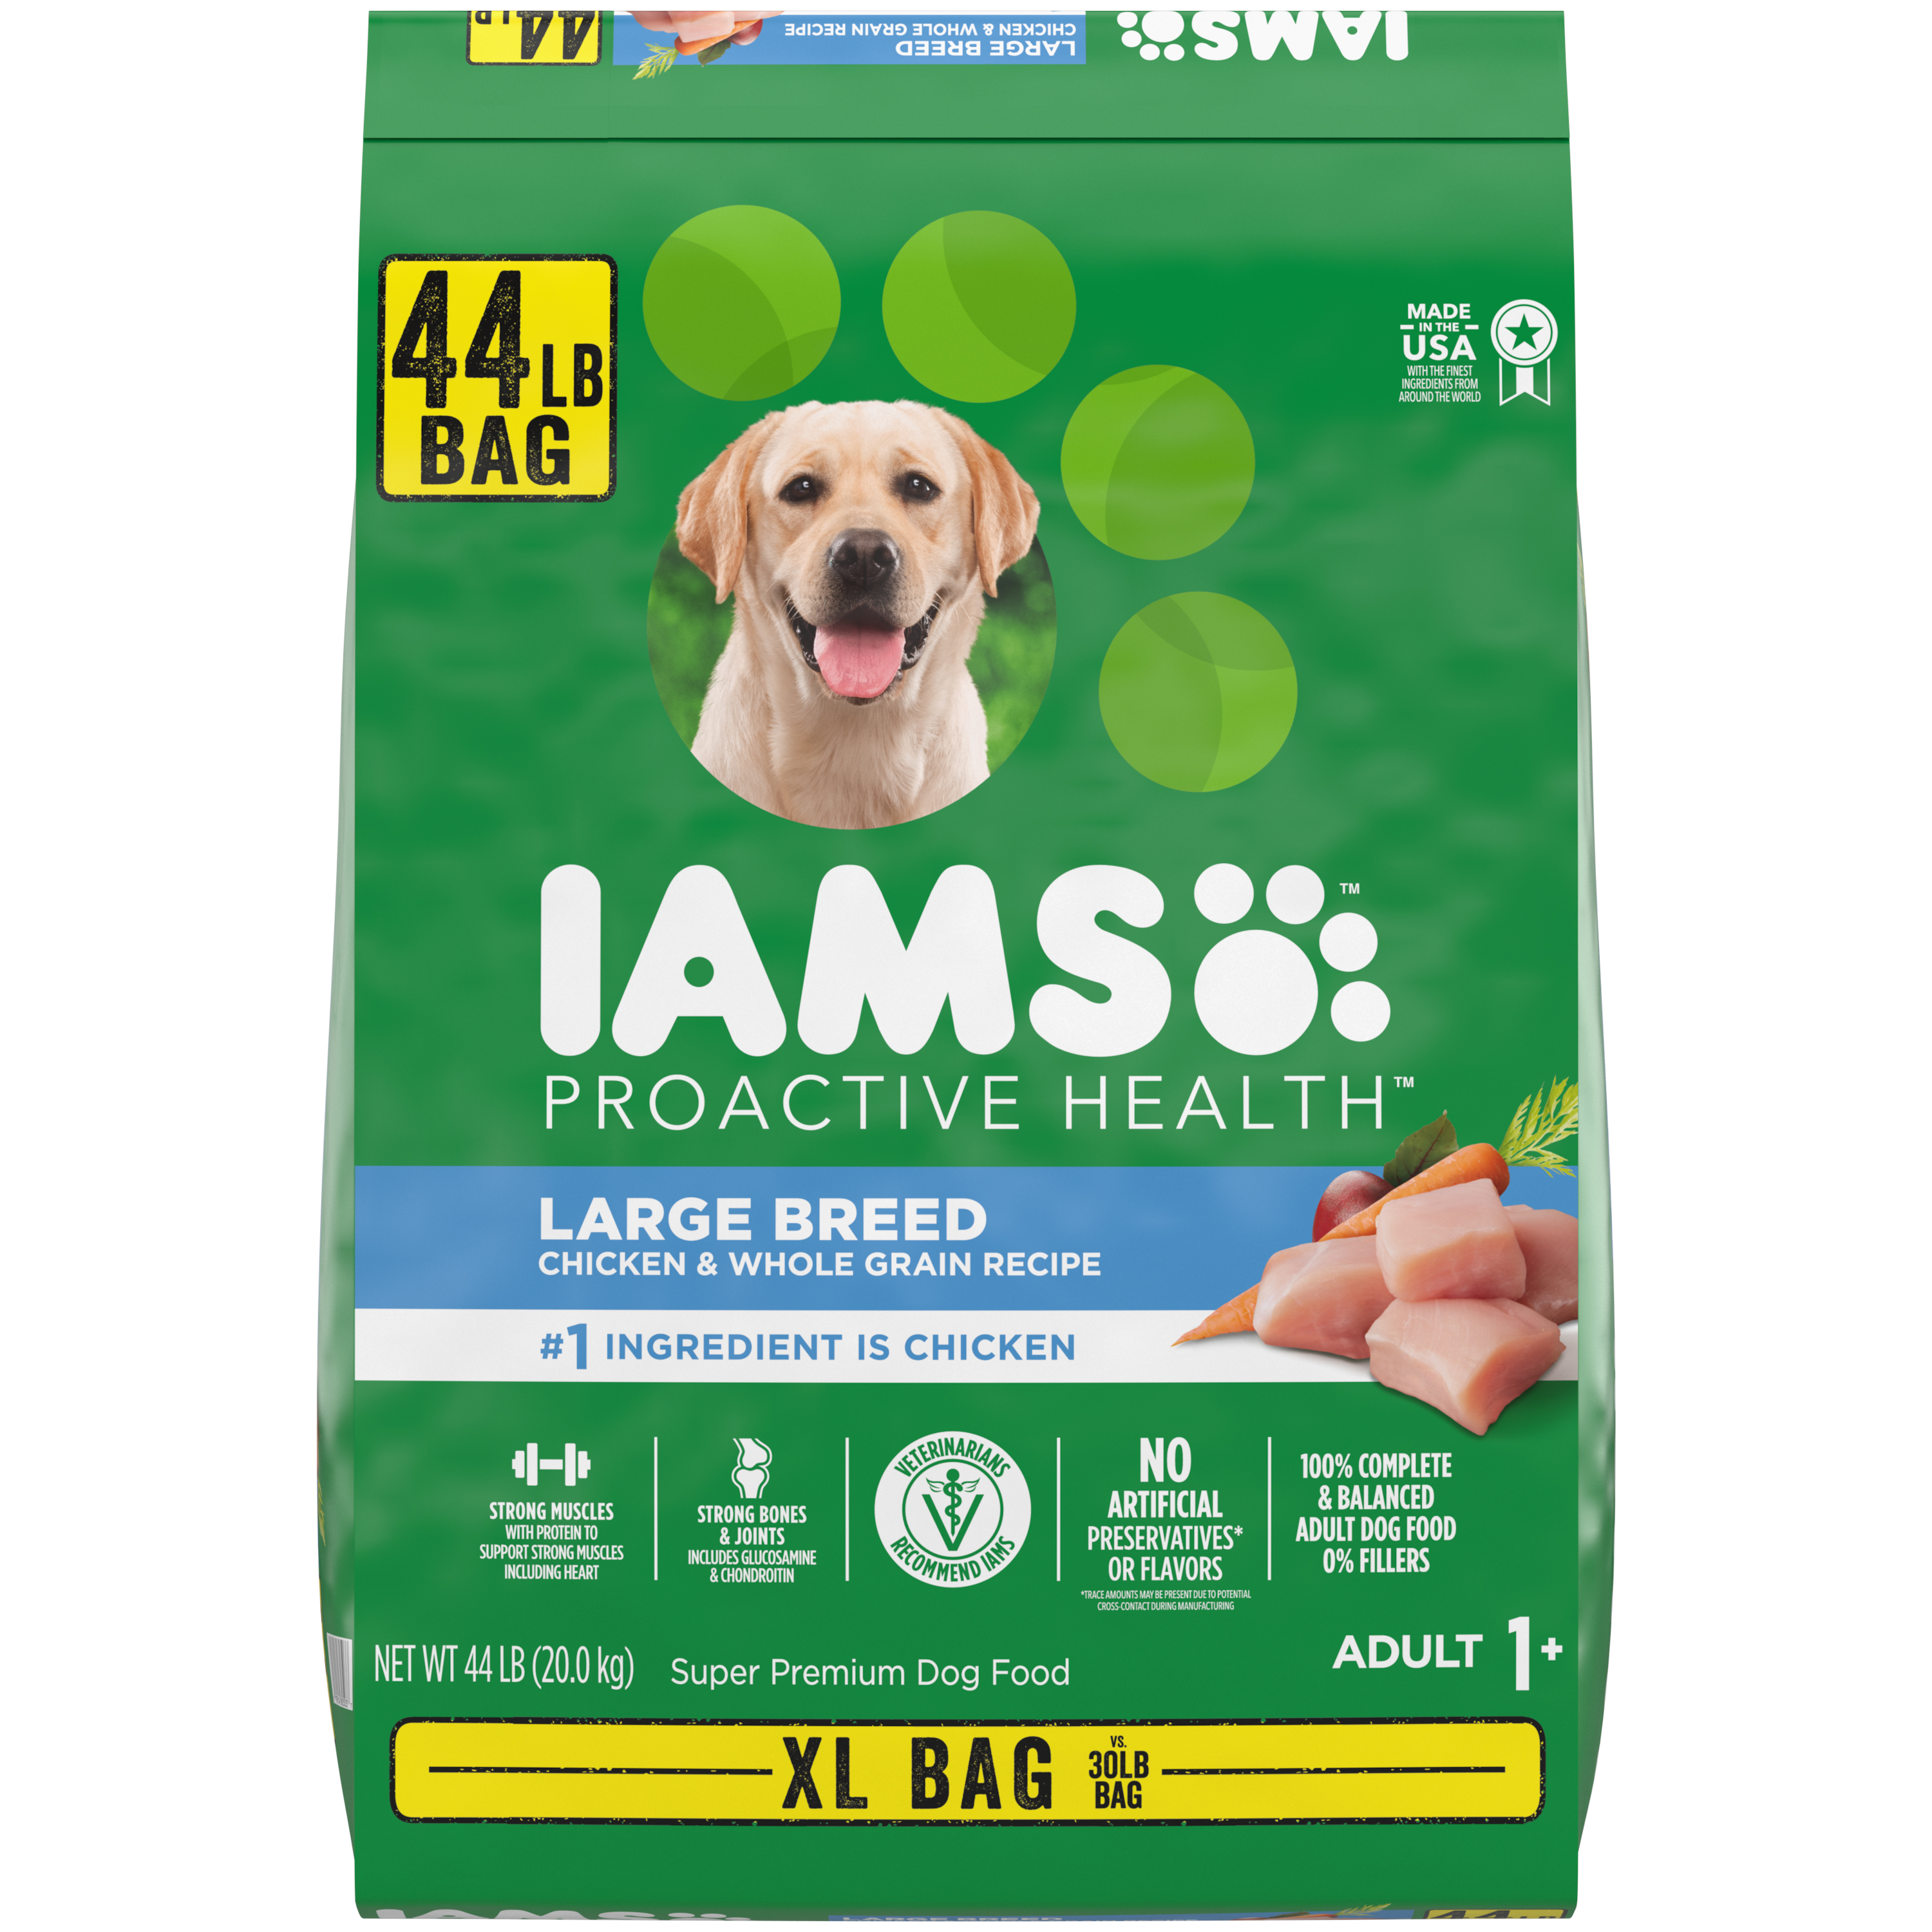 44 Lb Iams Large Breed - Health/First Aid